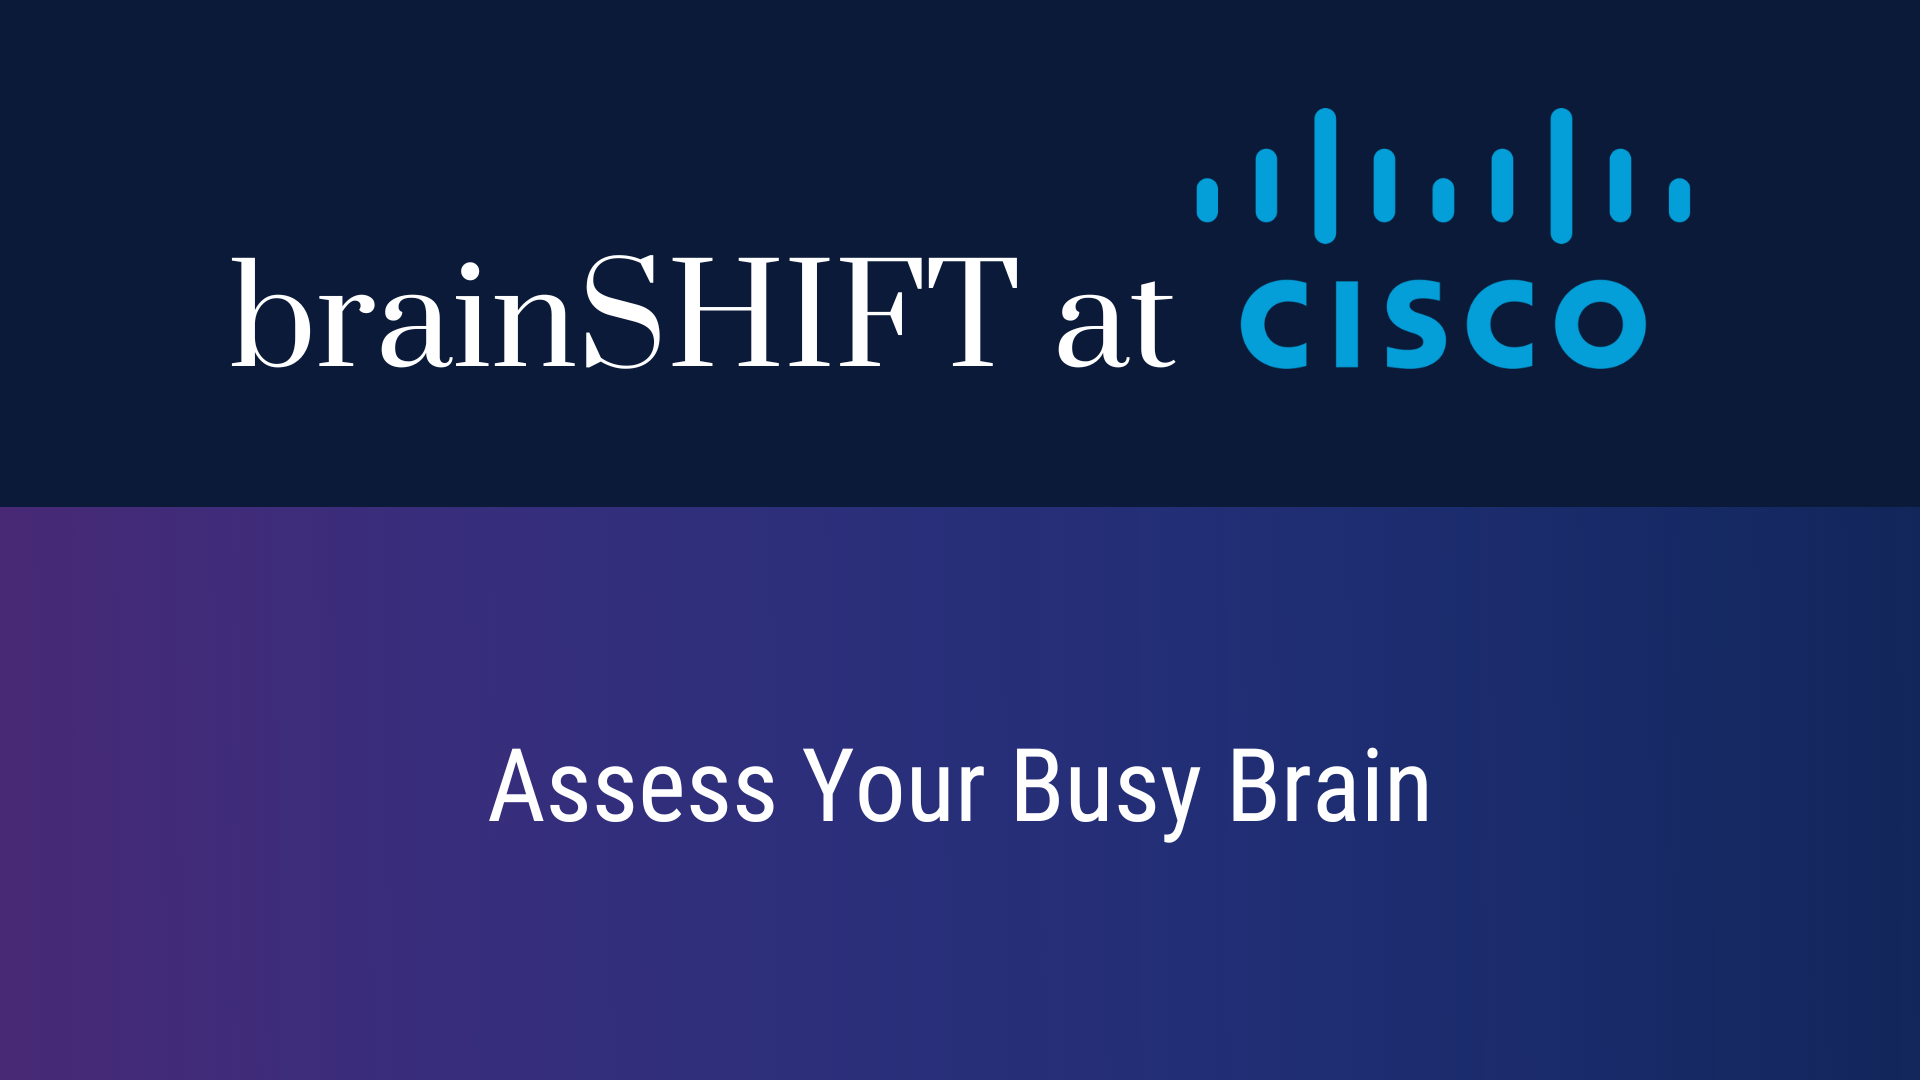 brainSHIFT at Cisco